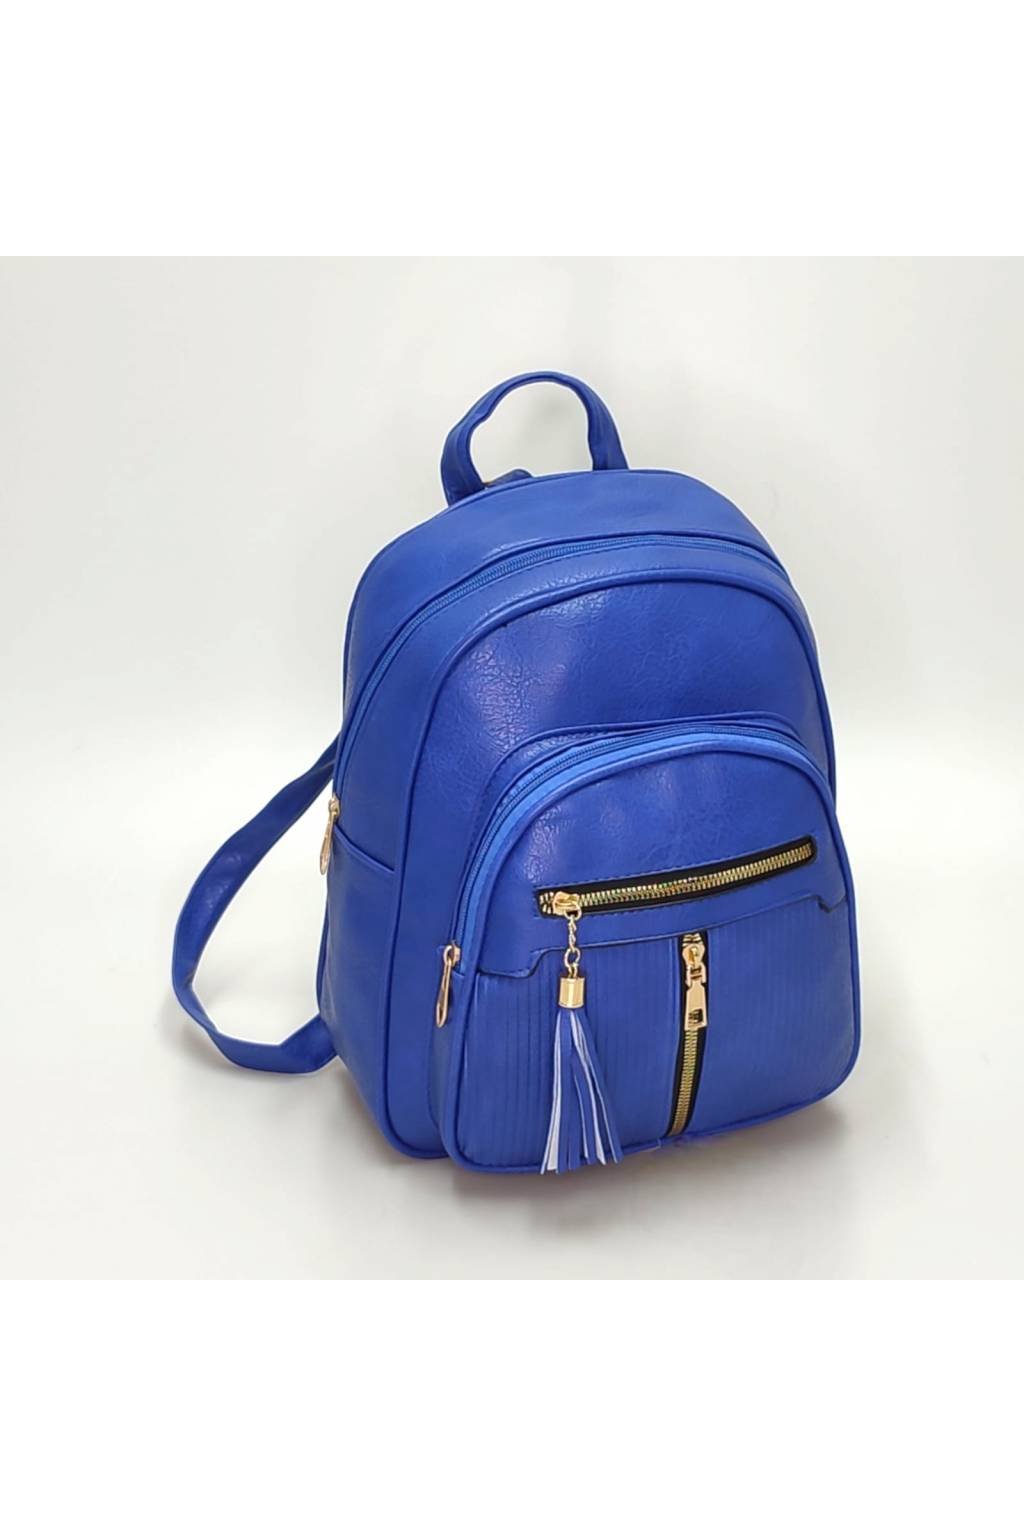 Dámsky ruksak 8165 modrá www.kabelky vypredaj (19)